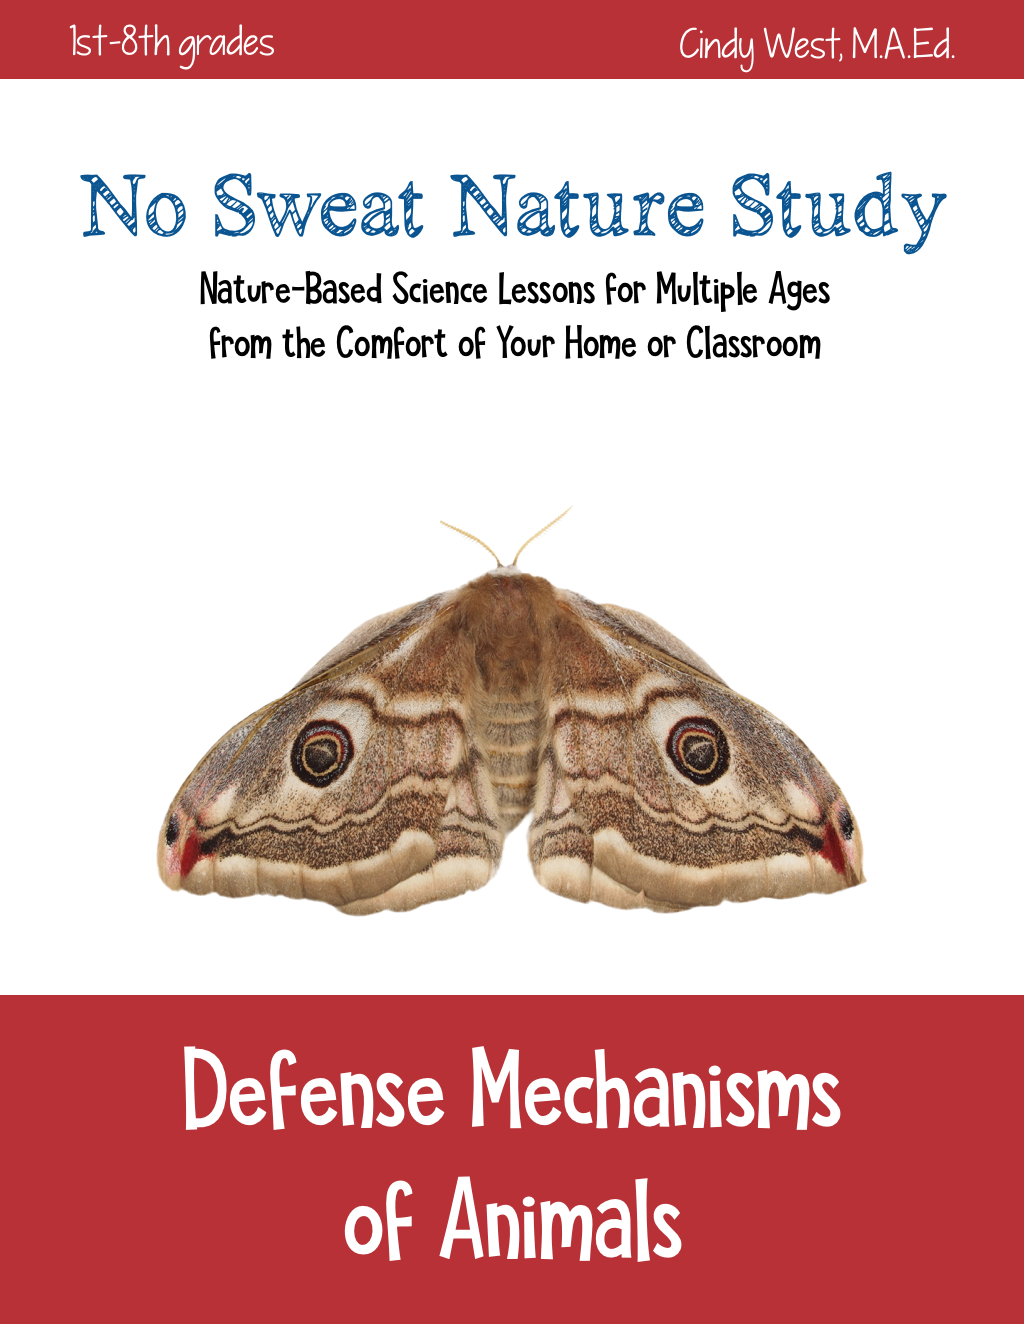 Defense Mechanisms of Animals: No Sweat Nature Study Curriculum